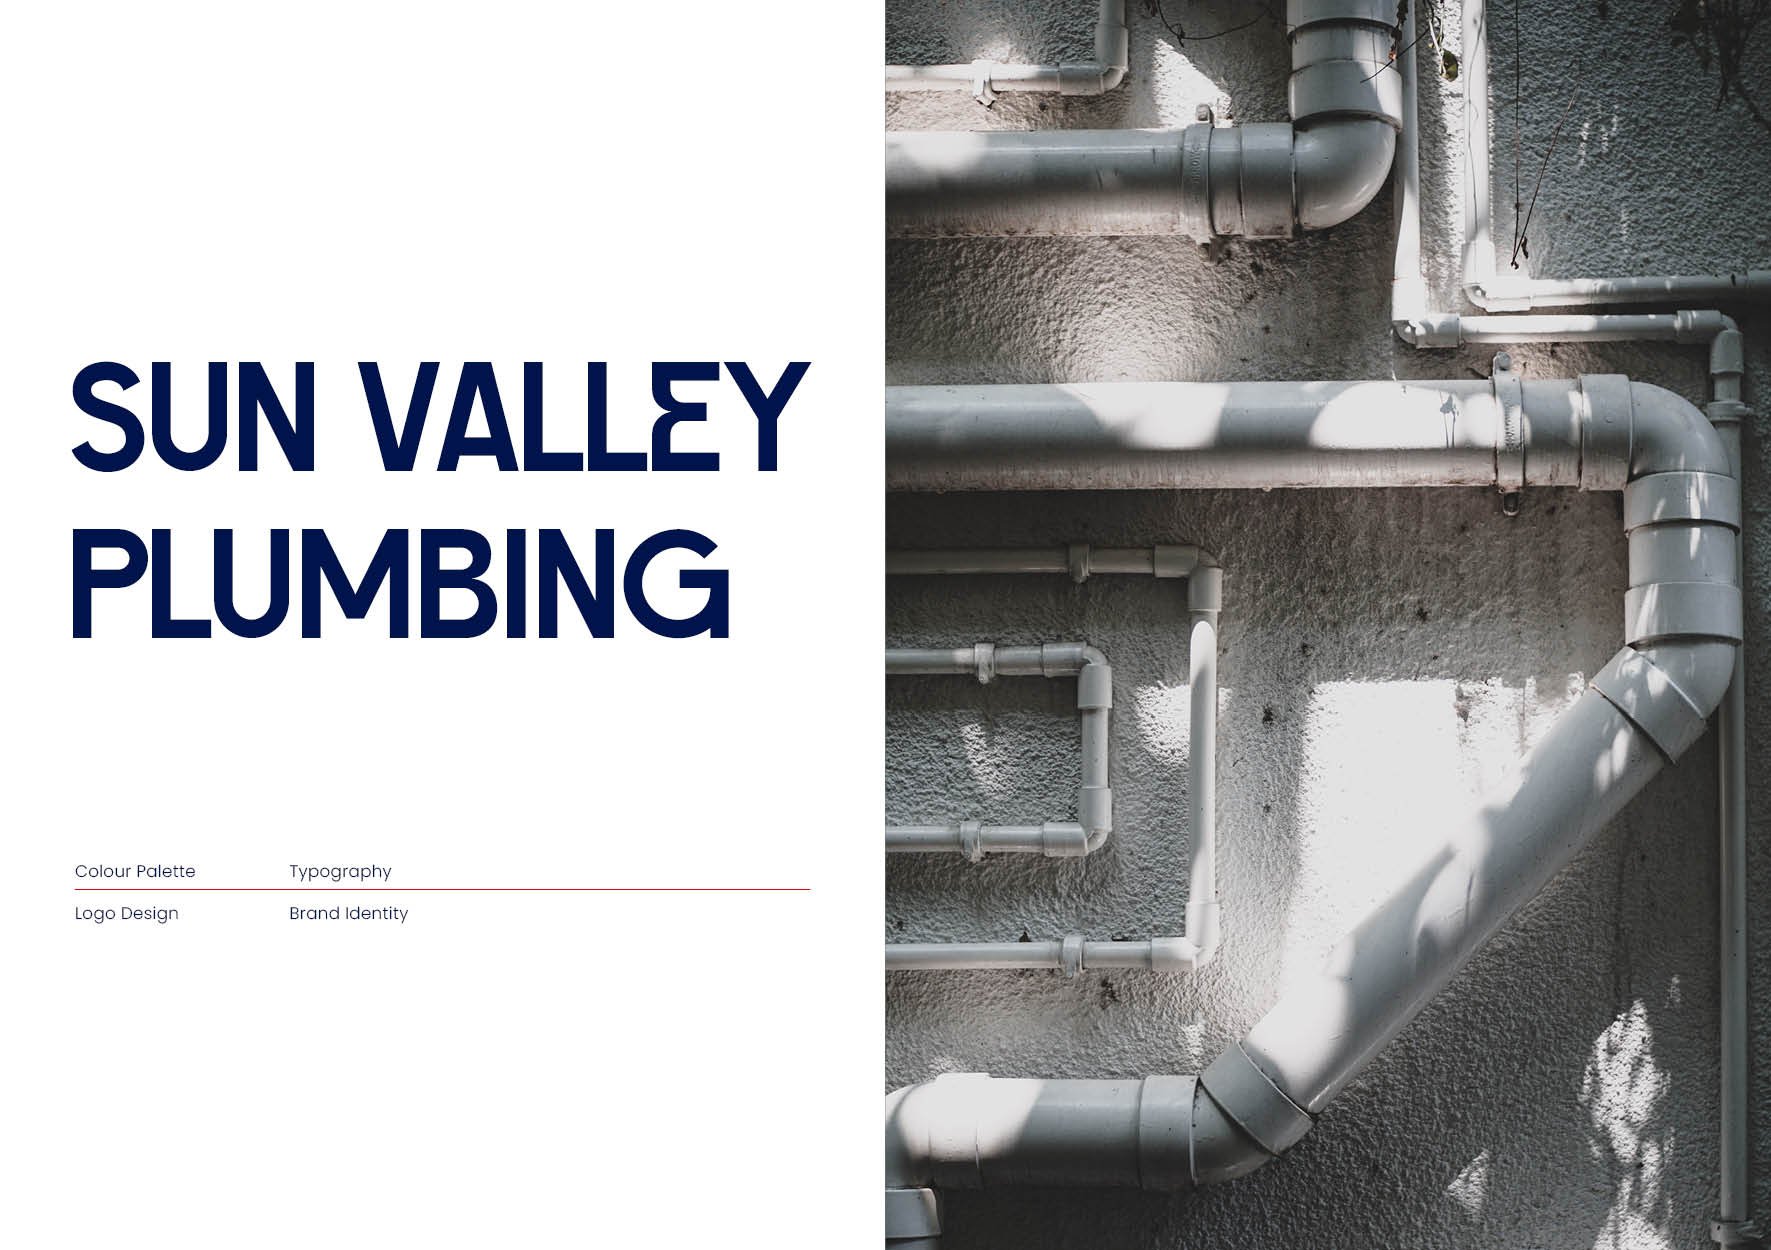 Sun Valley Plumbing - Brand Identity.jpg